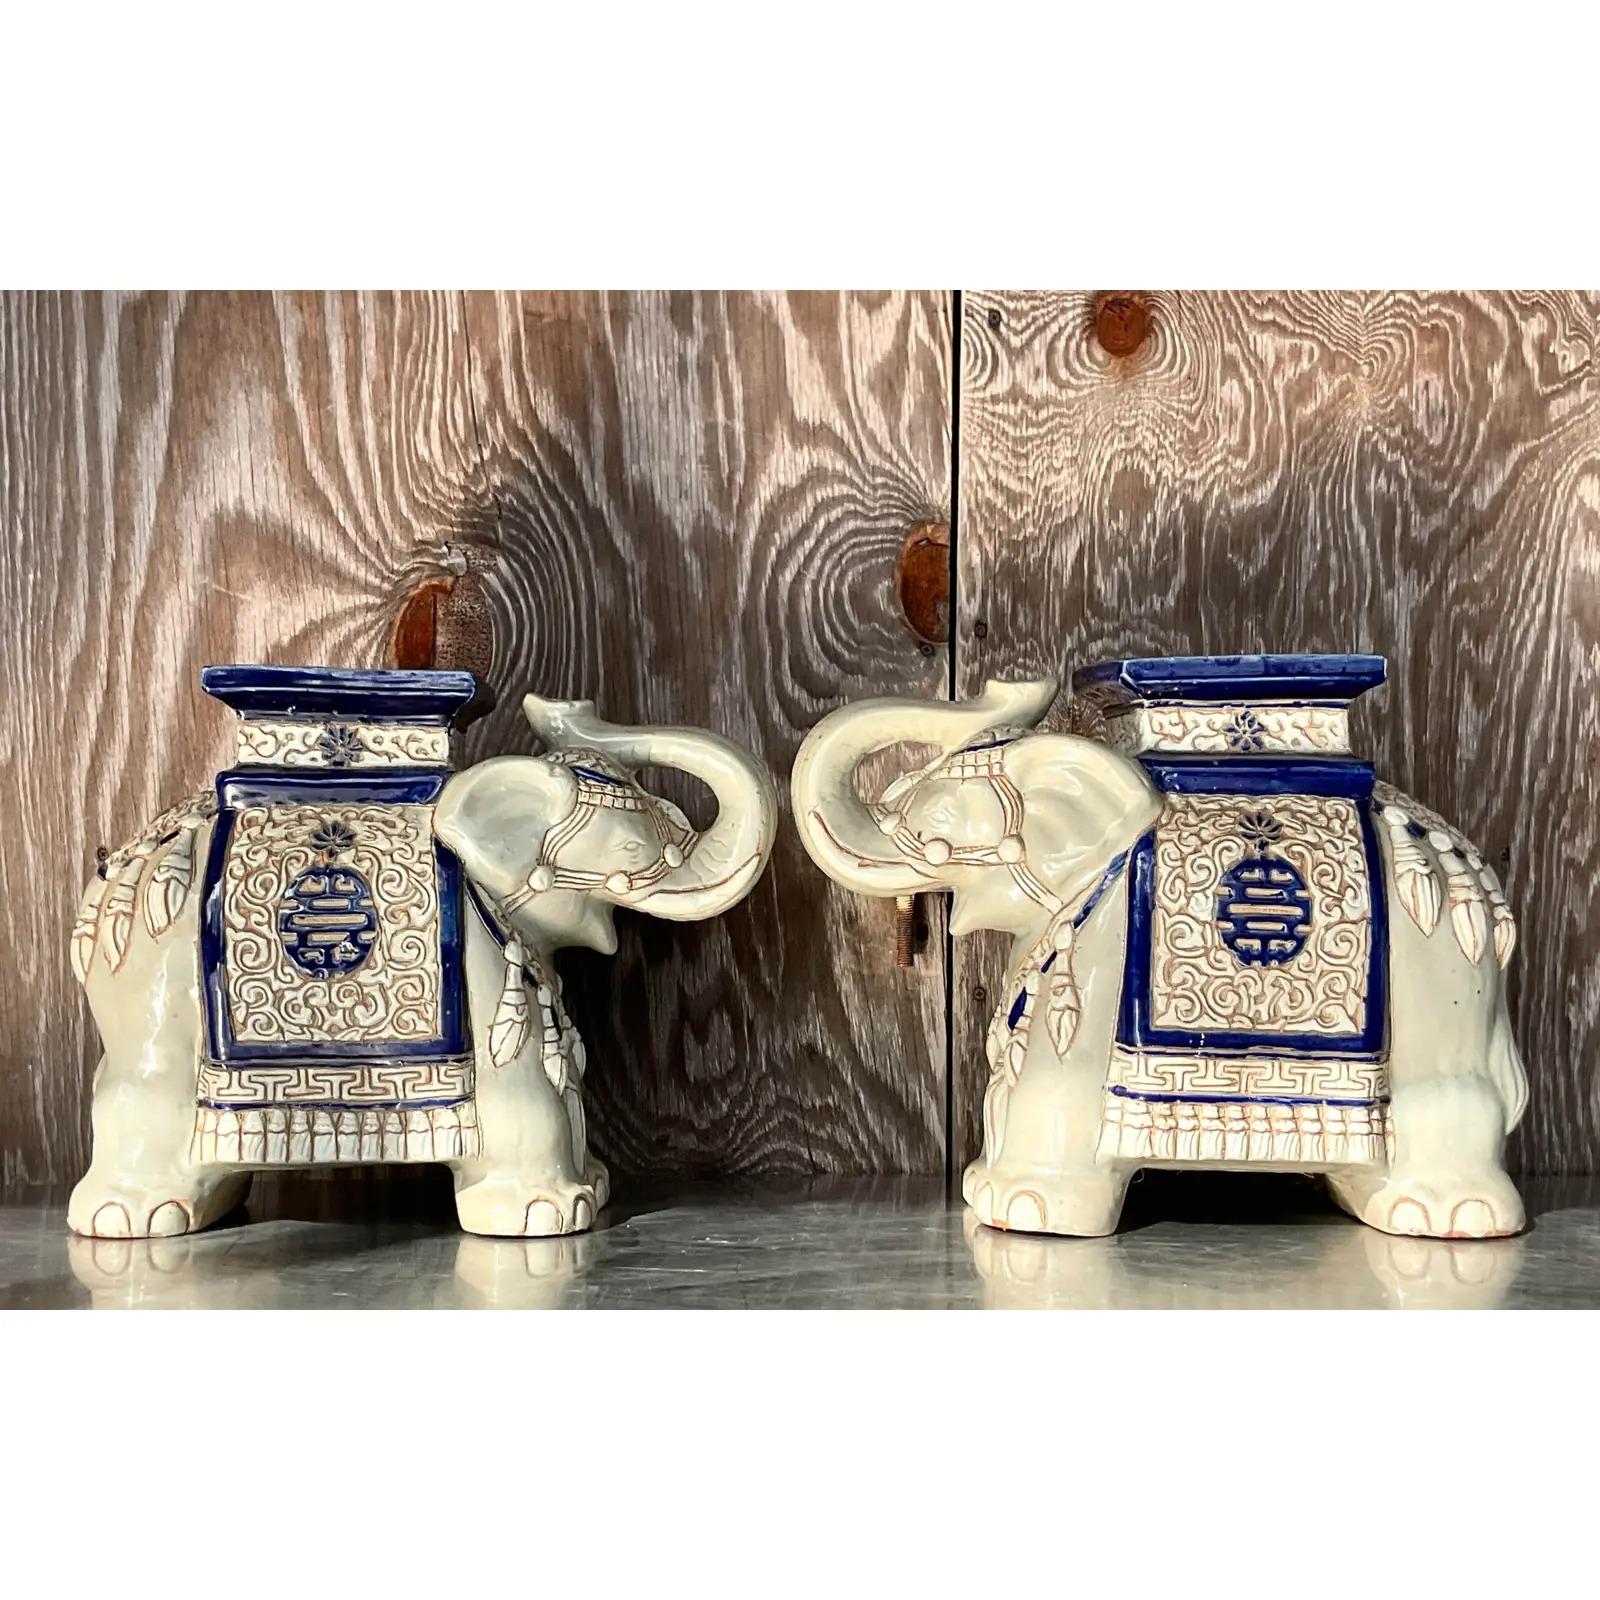 North American Vintage Regency Glazed Ceramic Elephants - a Pair For Sale